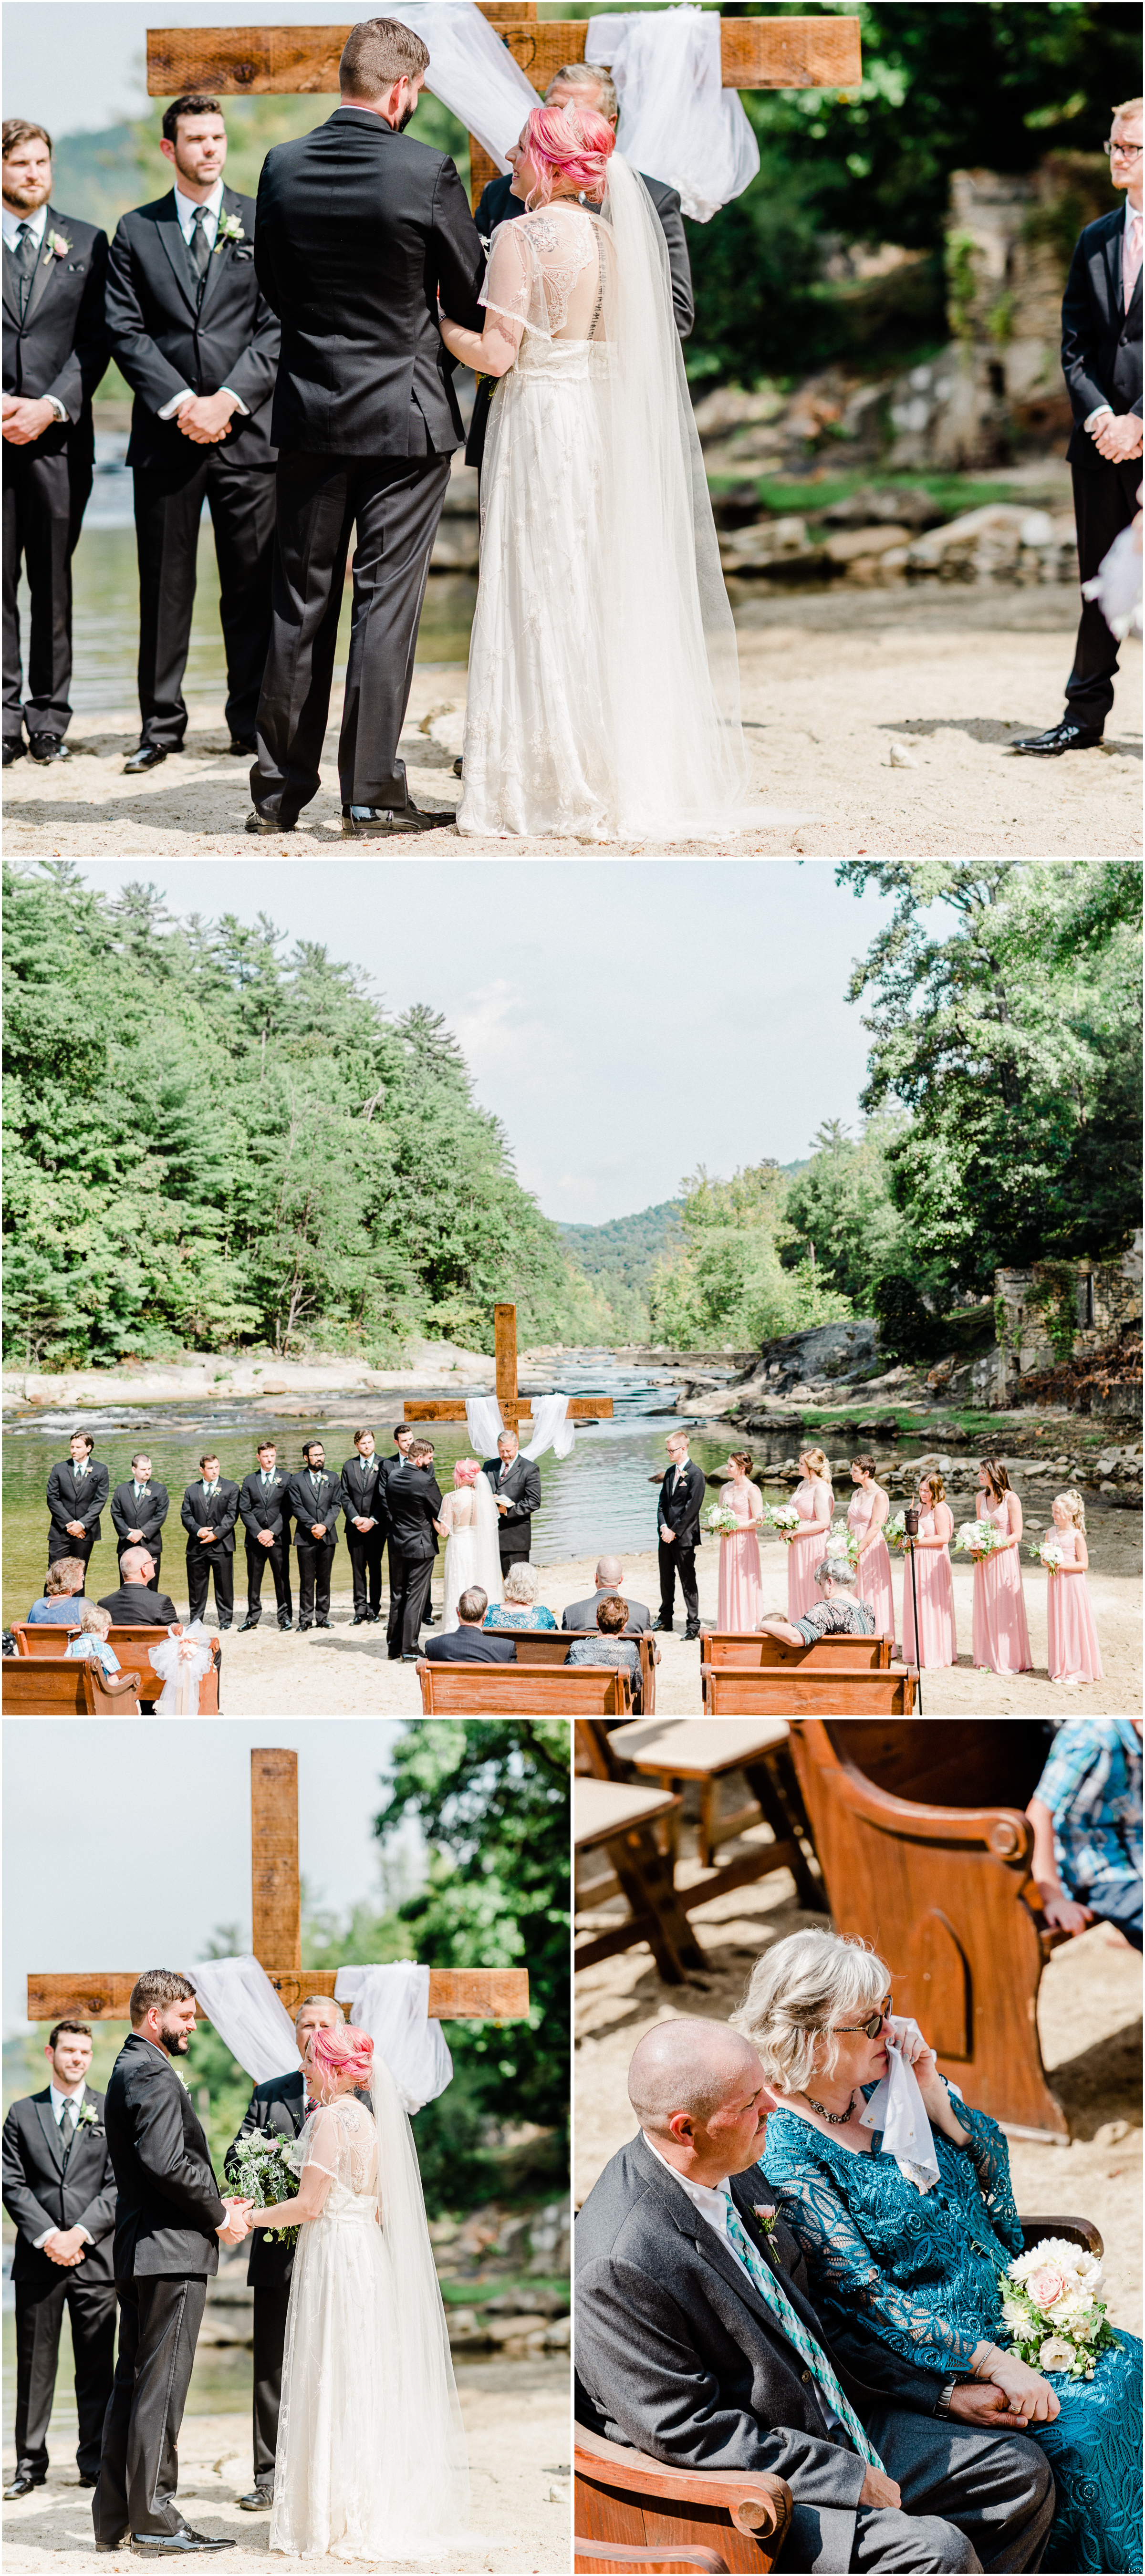 Brown Mountain Beach Resort Wedding in Lenoir, North Carolina Ceremony Photos